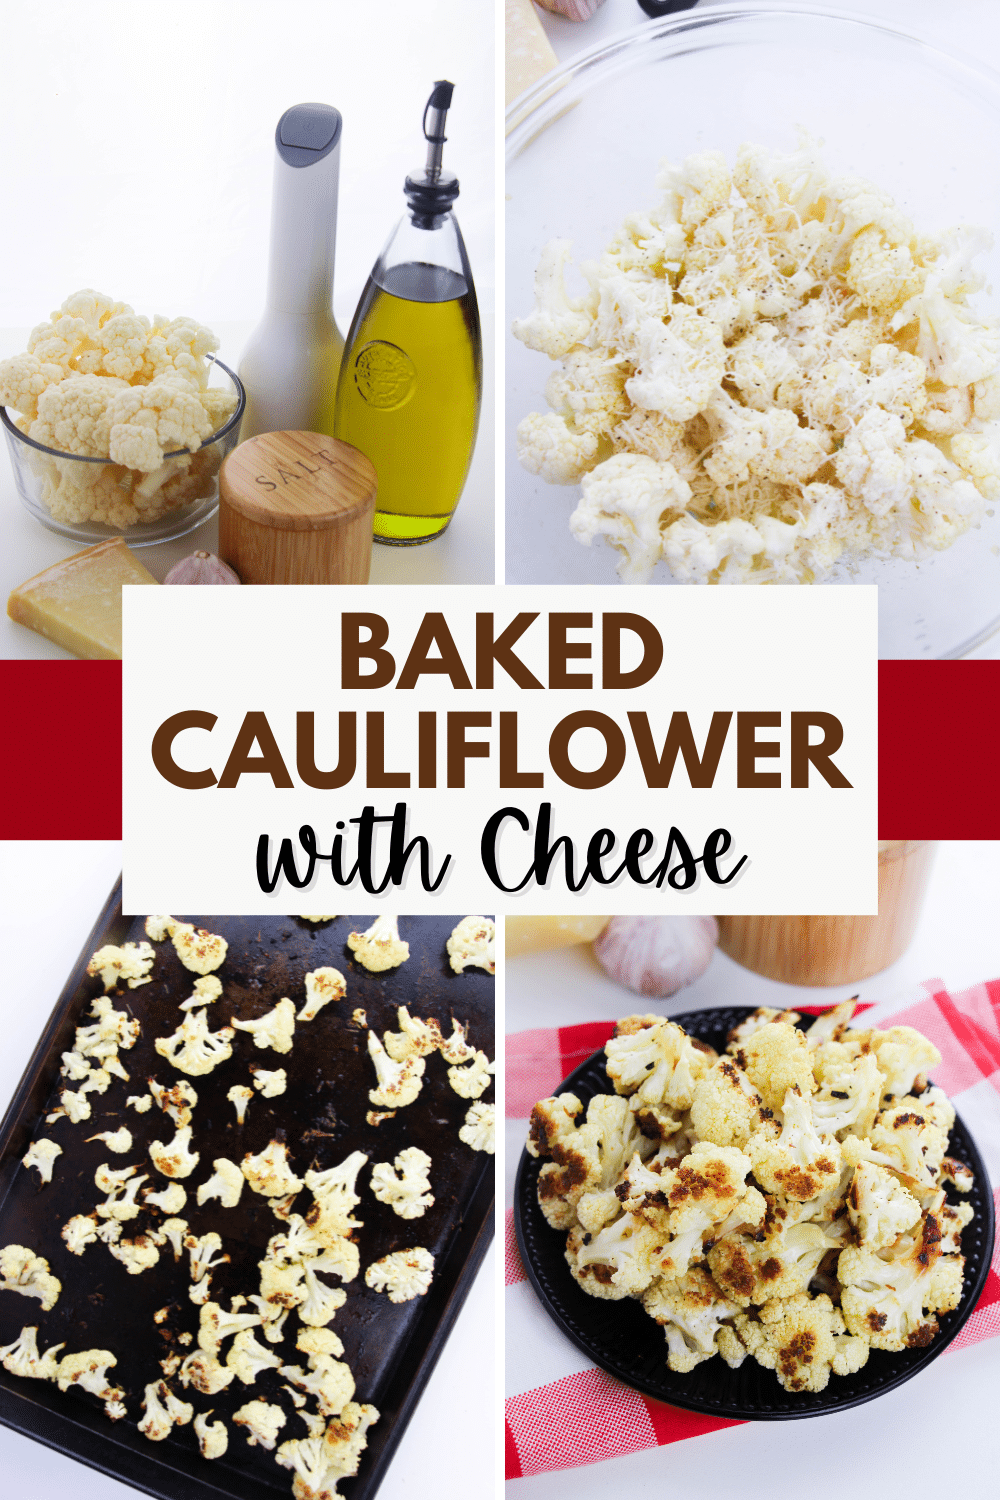 Cauliflower and cheese casserole.